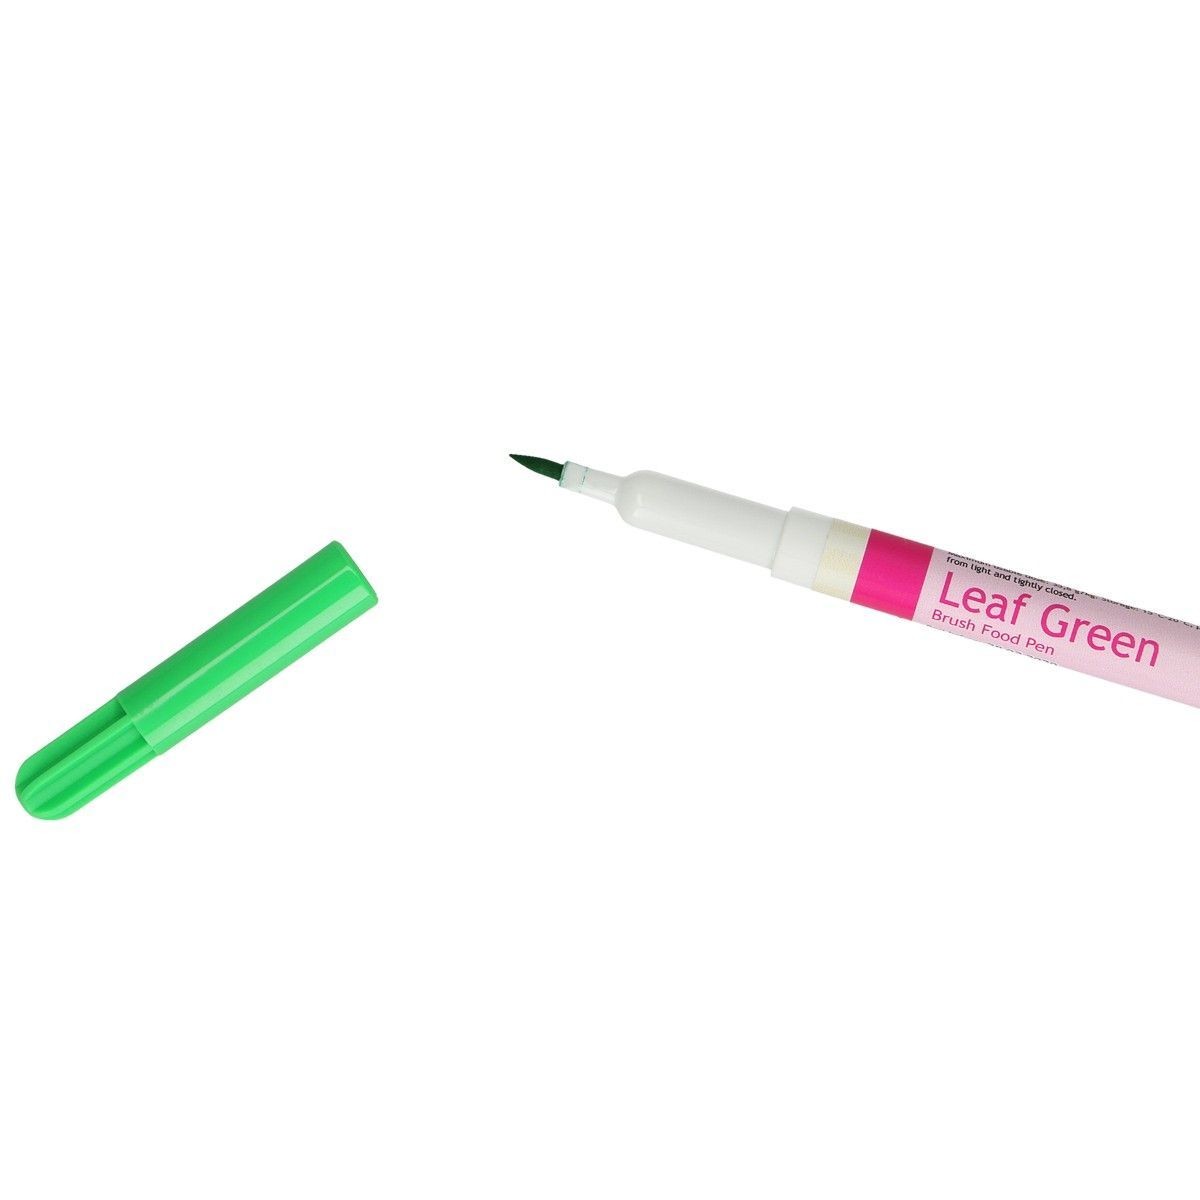 FunCakes Edible Brush Food Pen -LEAF GREEN -Βρώσιμος Μαρκαδόρος με Μύτη Πινέλου -Πράσινο του Φύλλου